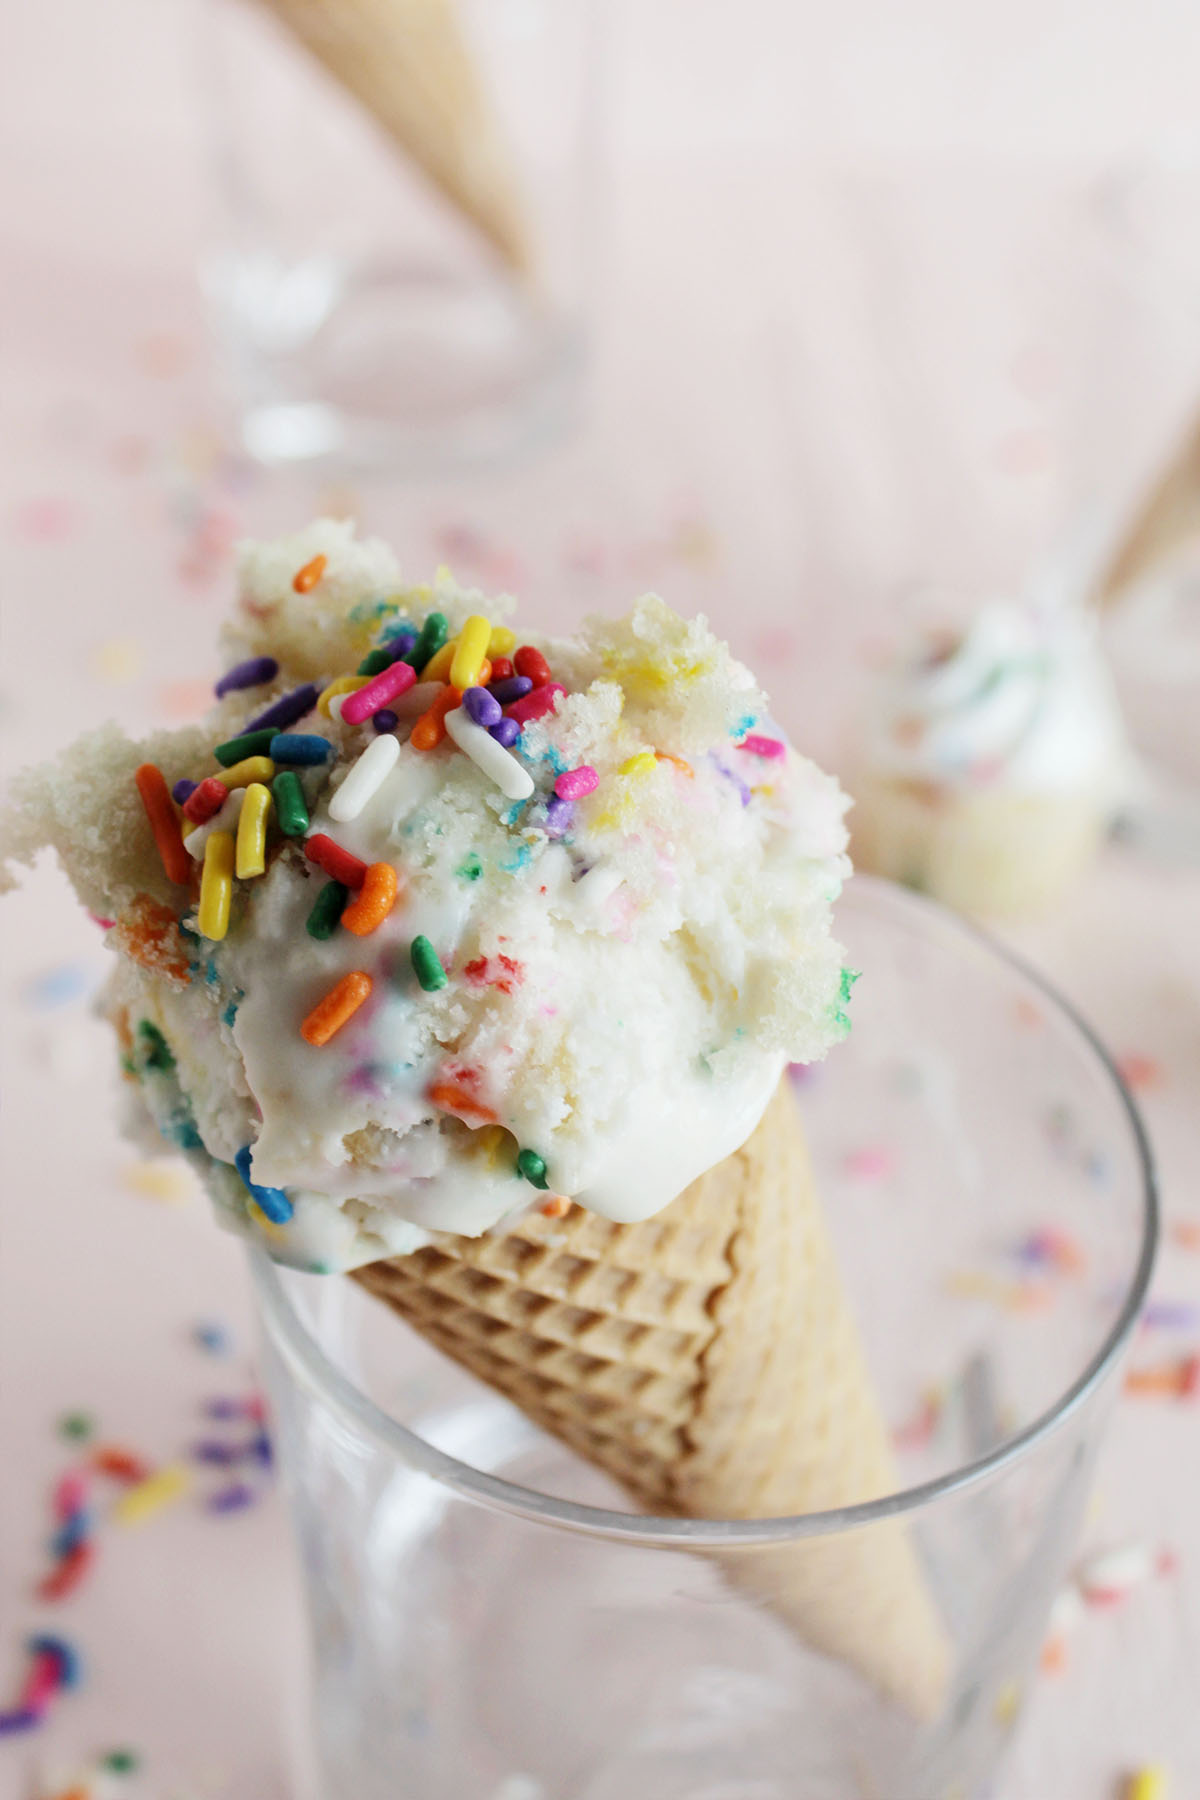 vanilla ice cream with rainbow sprinkles with cake chunks